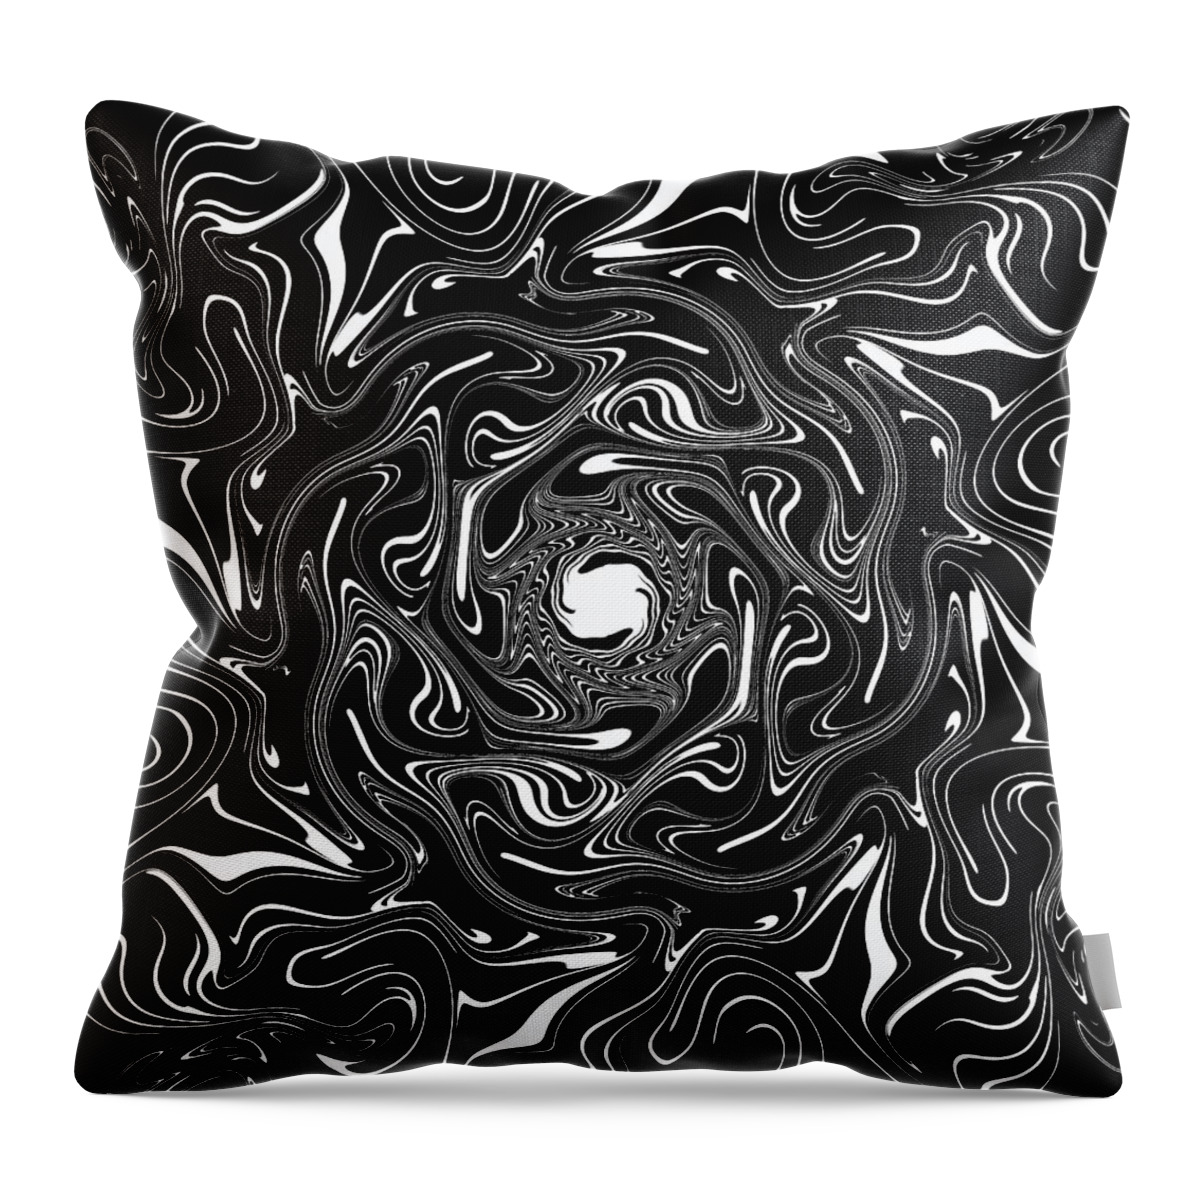 Symmetry Throw Pillow featuring the digital art Symmetry 3 by David G Paul